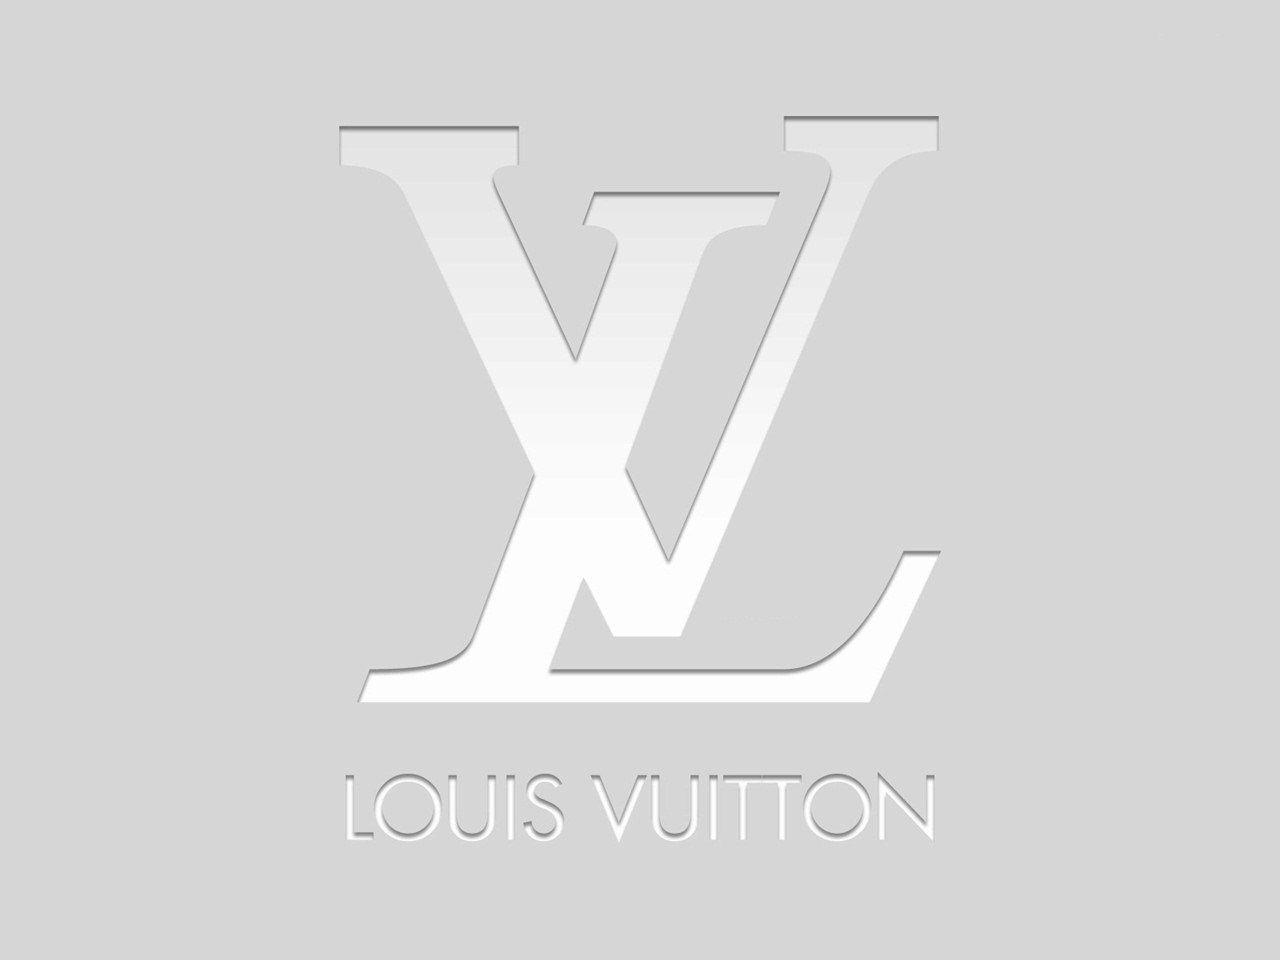 Louis Vuitton White Logo - LogoDix